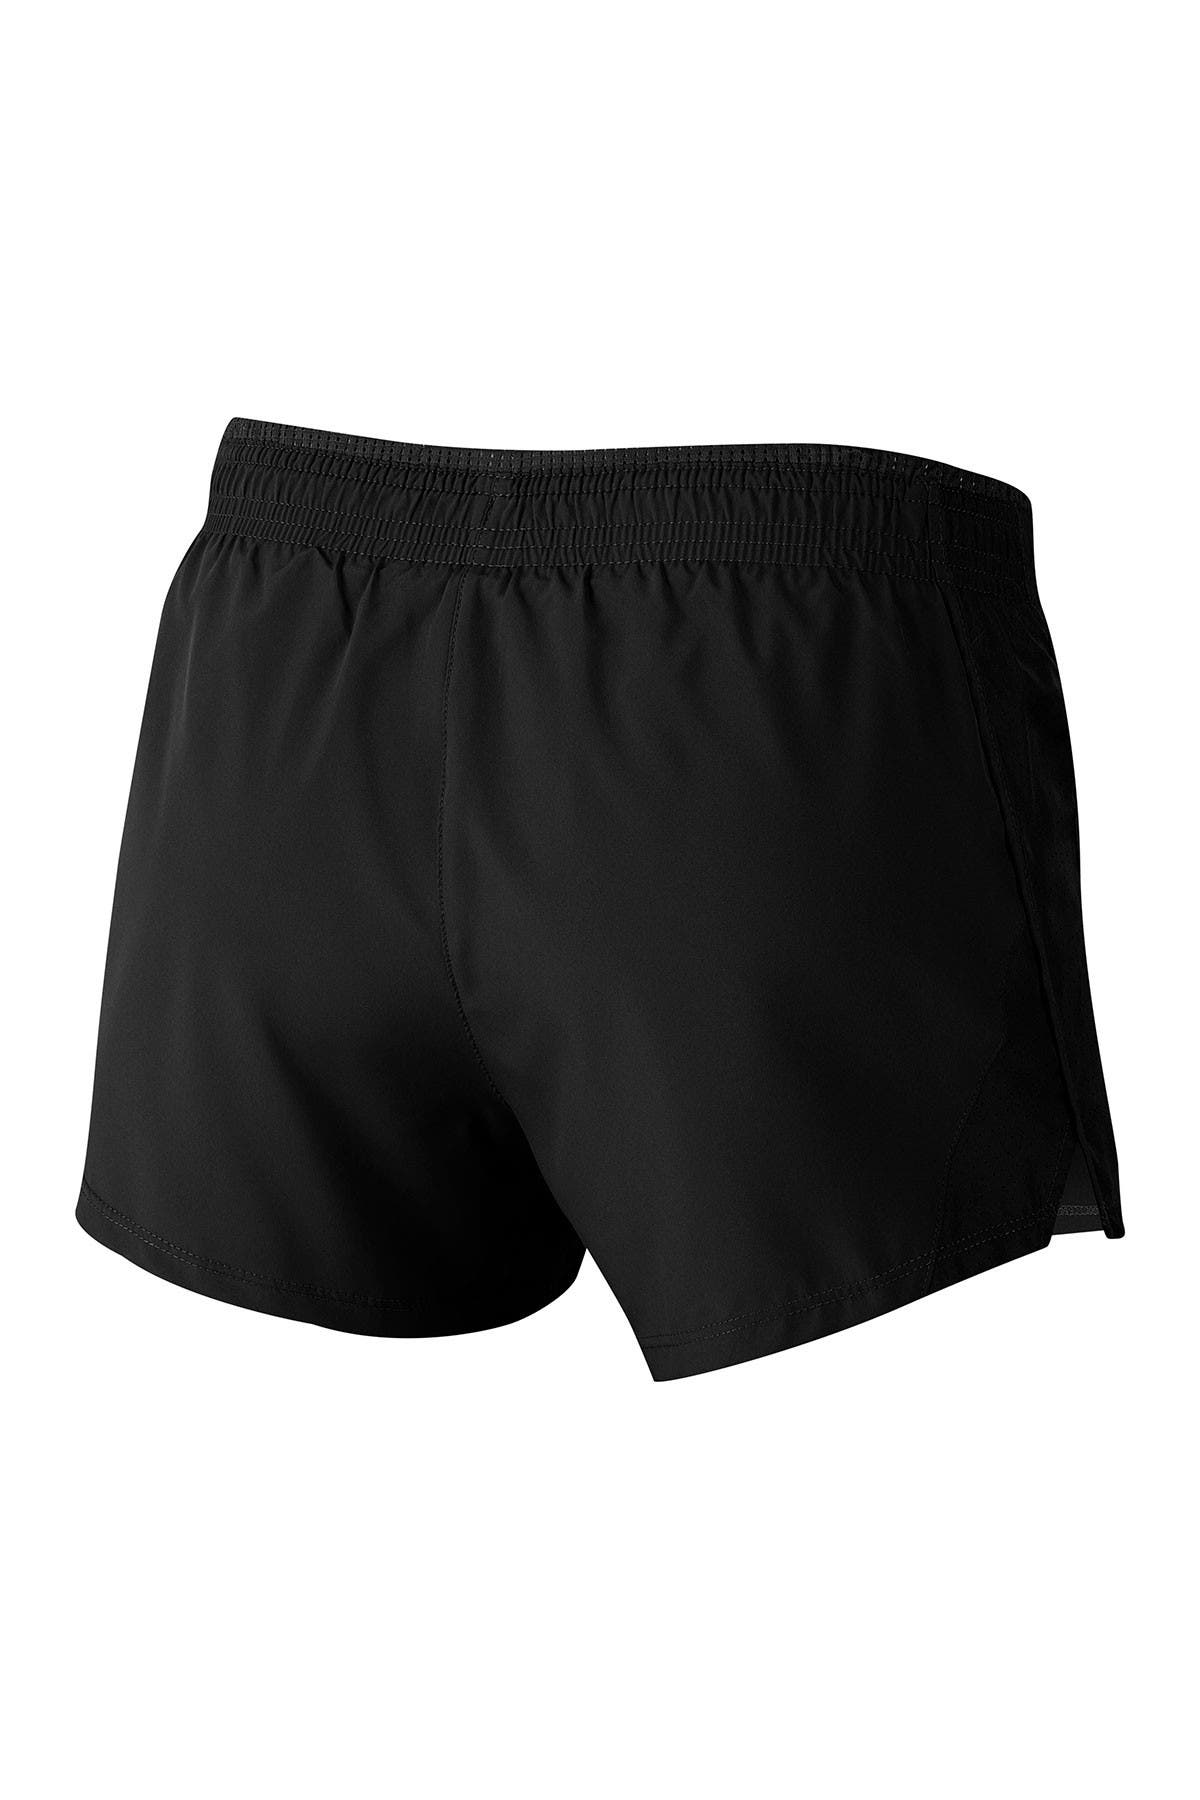 nordstrom rack nike shorts